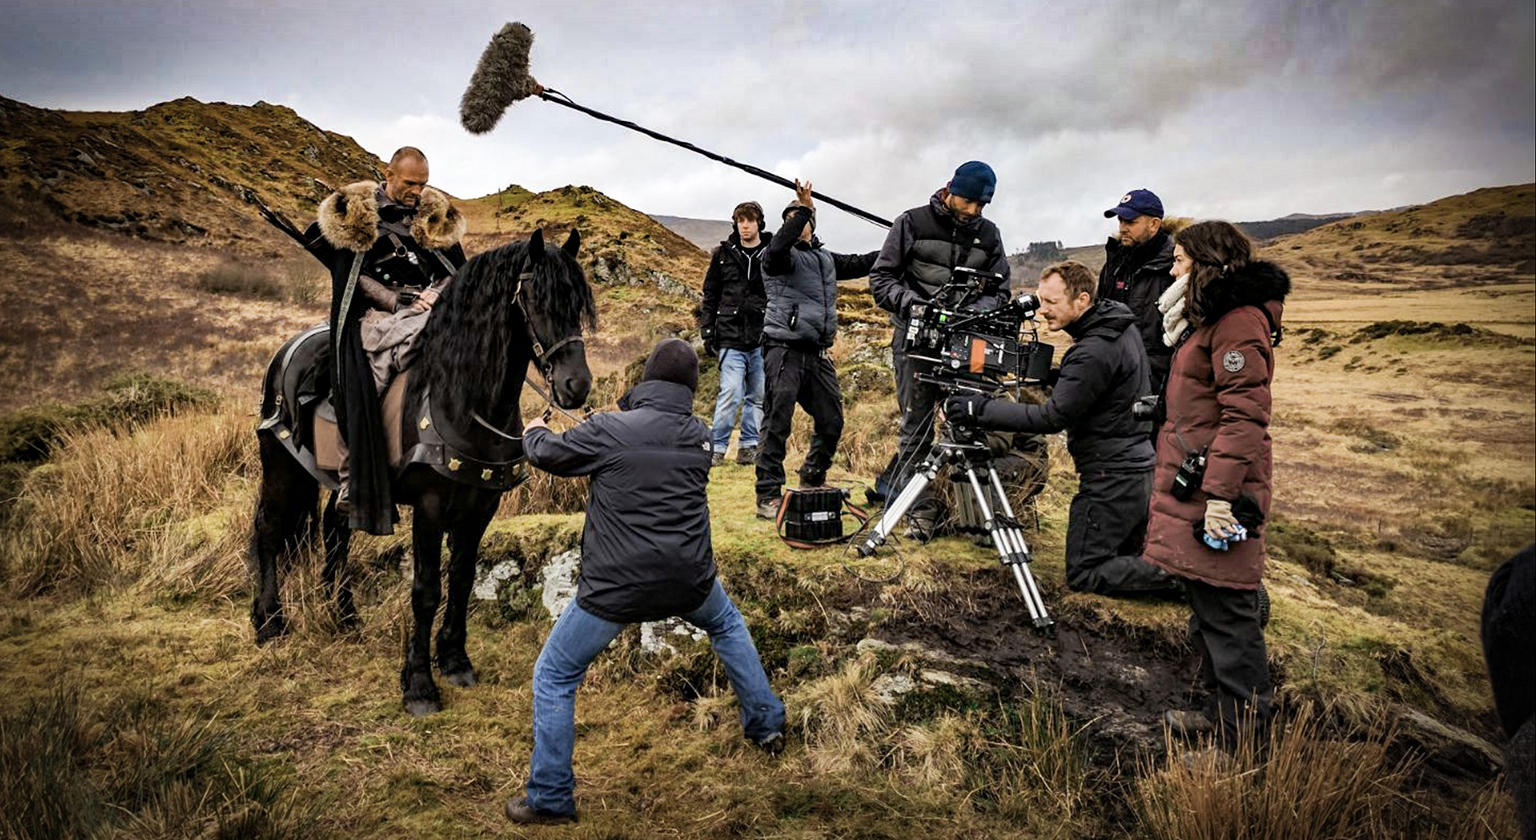 Film shoot on a Welsh mountainside for Beddgelert, dir. Medeni Griffiths, Ffilm Cymru Wales.